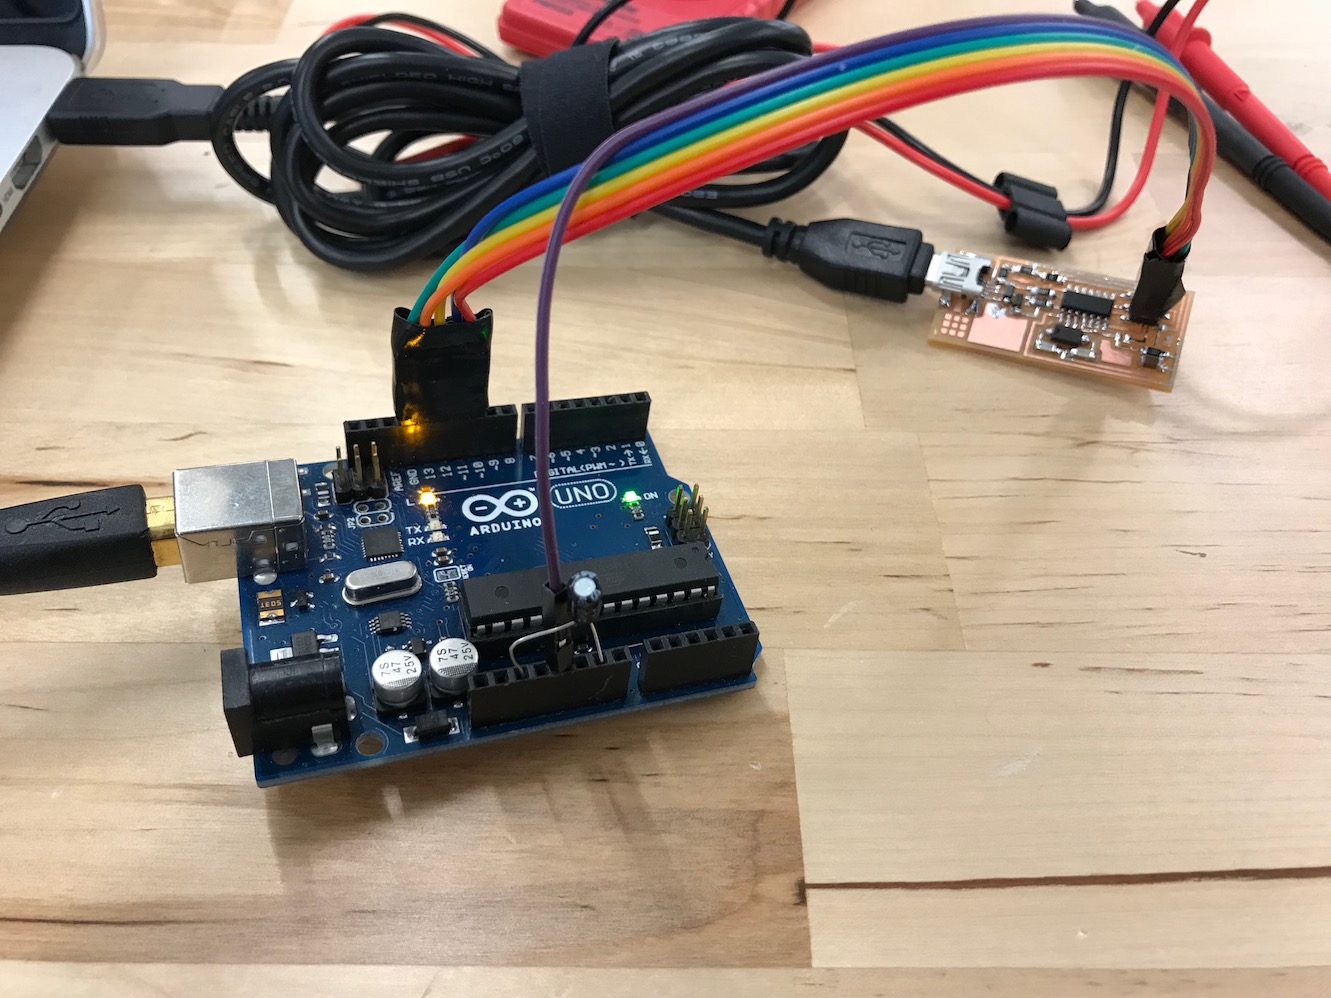 Arduino rewired to board